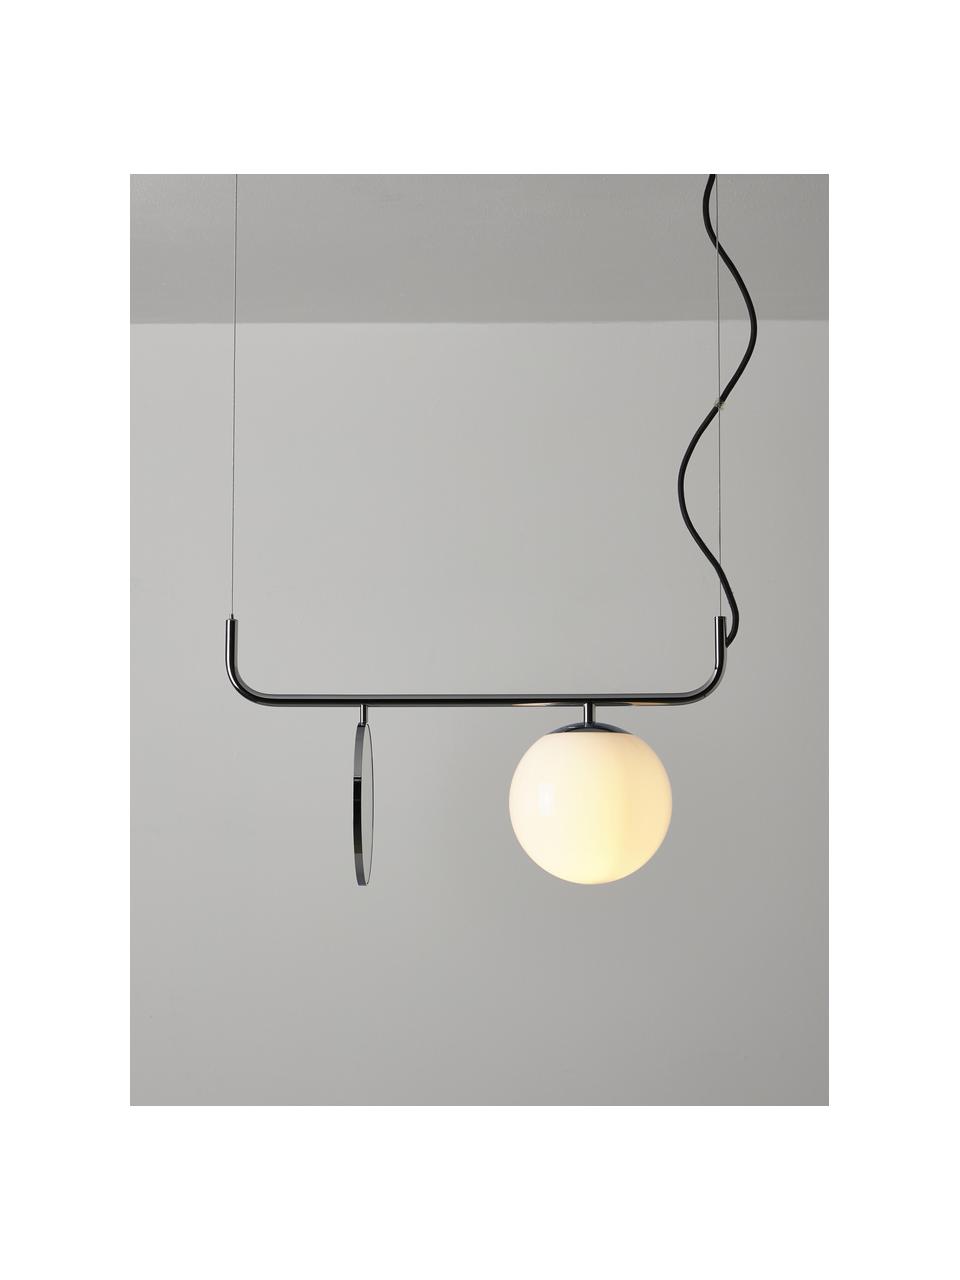 Hanglamp Mond met glazen bol, Lampenkap: opaalglas, Wit, chroomkleurig, Ø 20 x H 64 cm